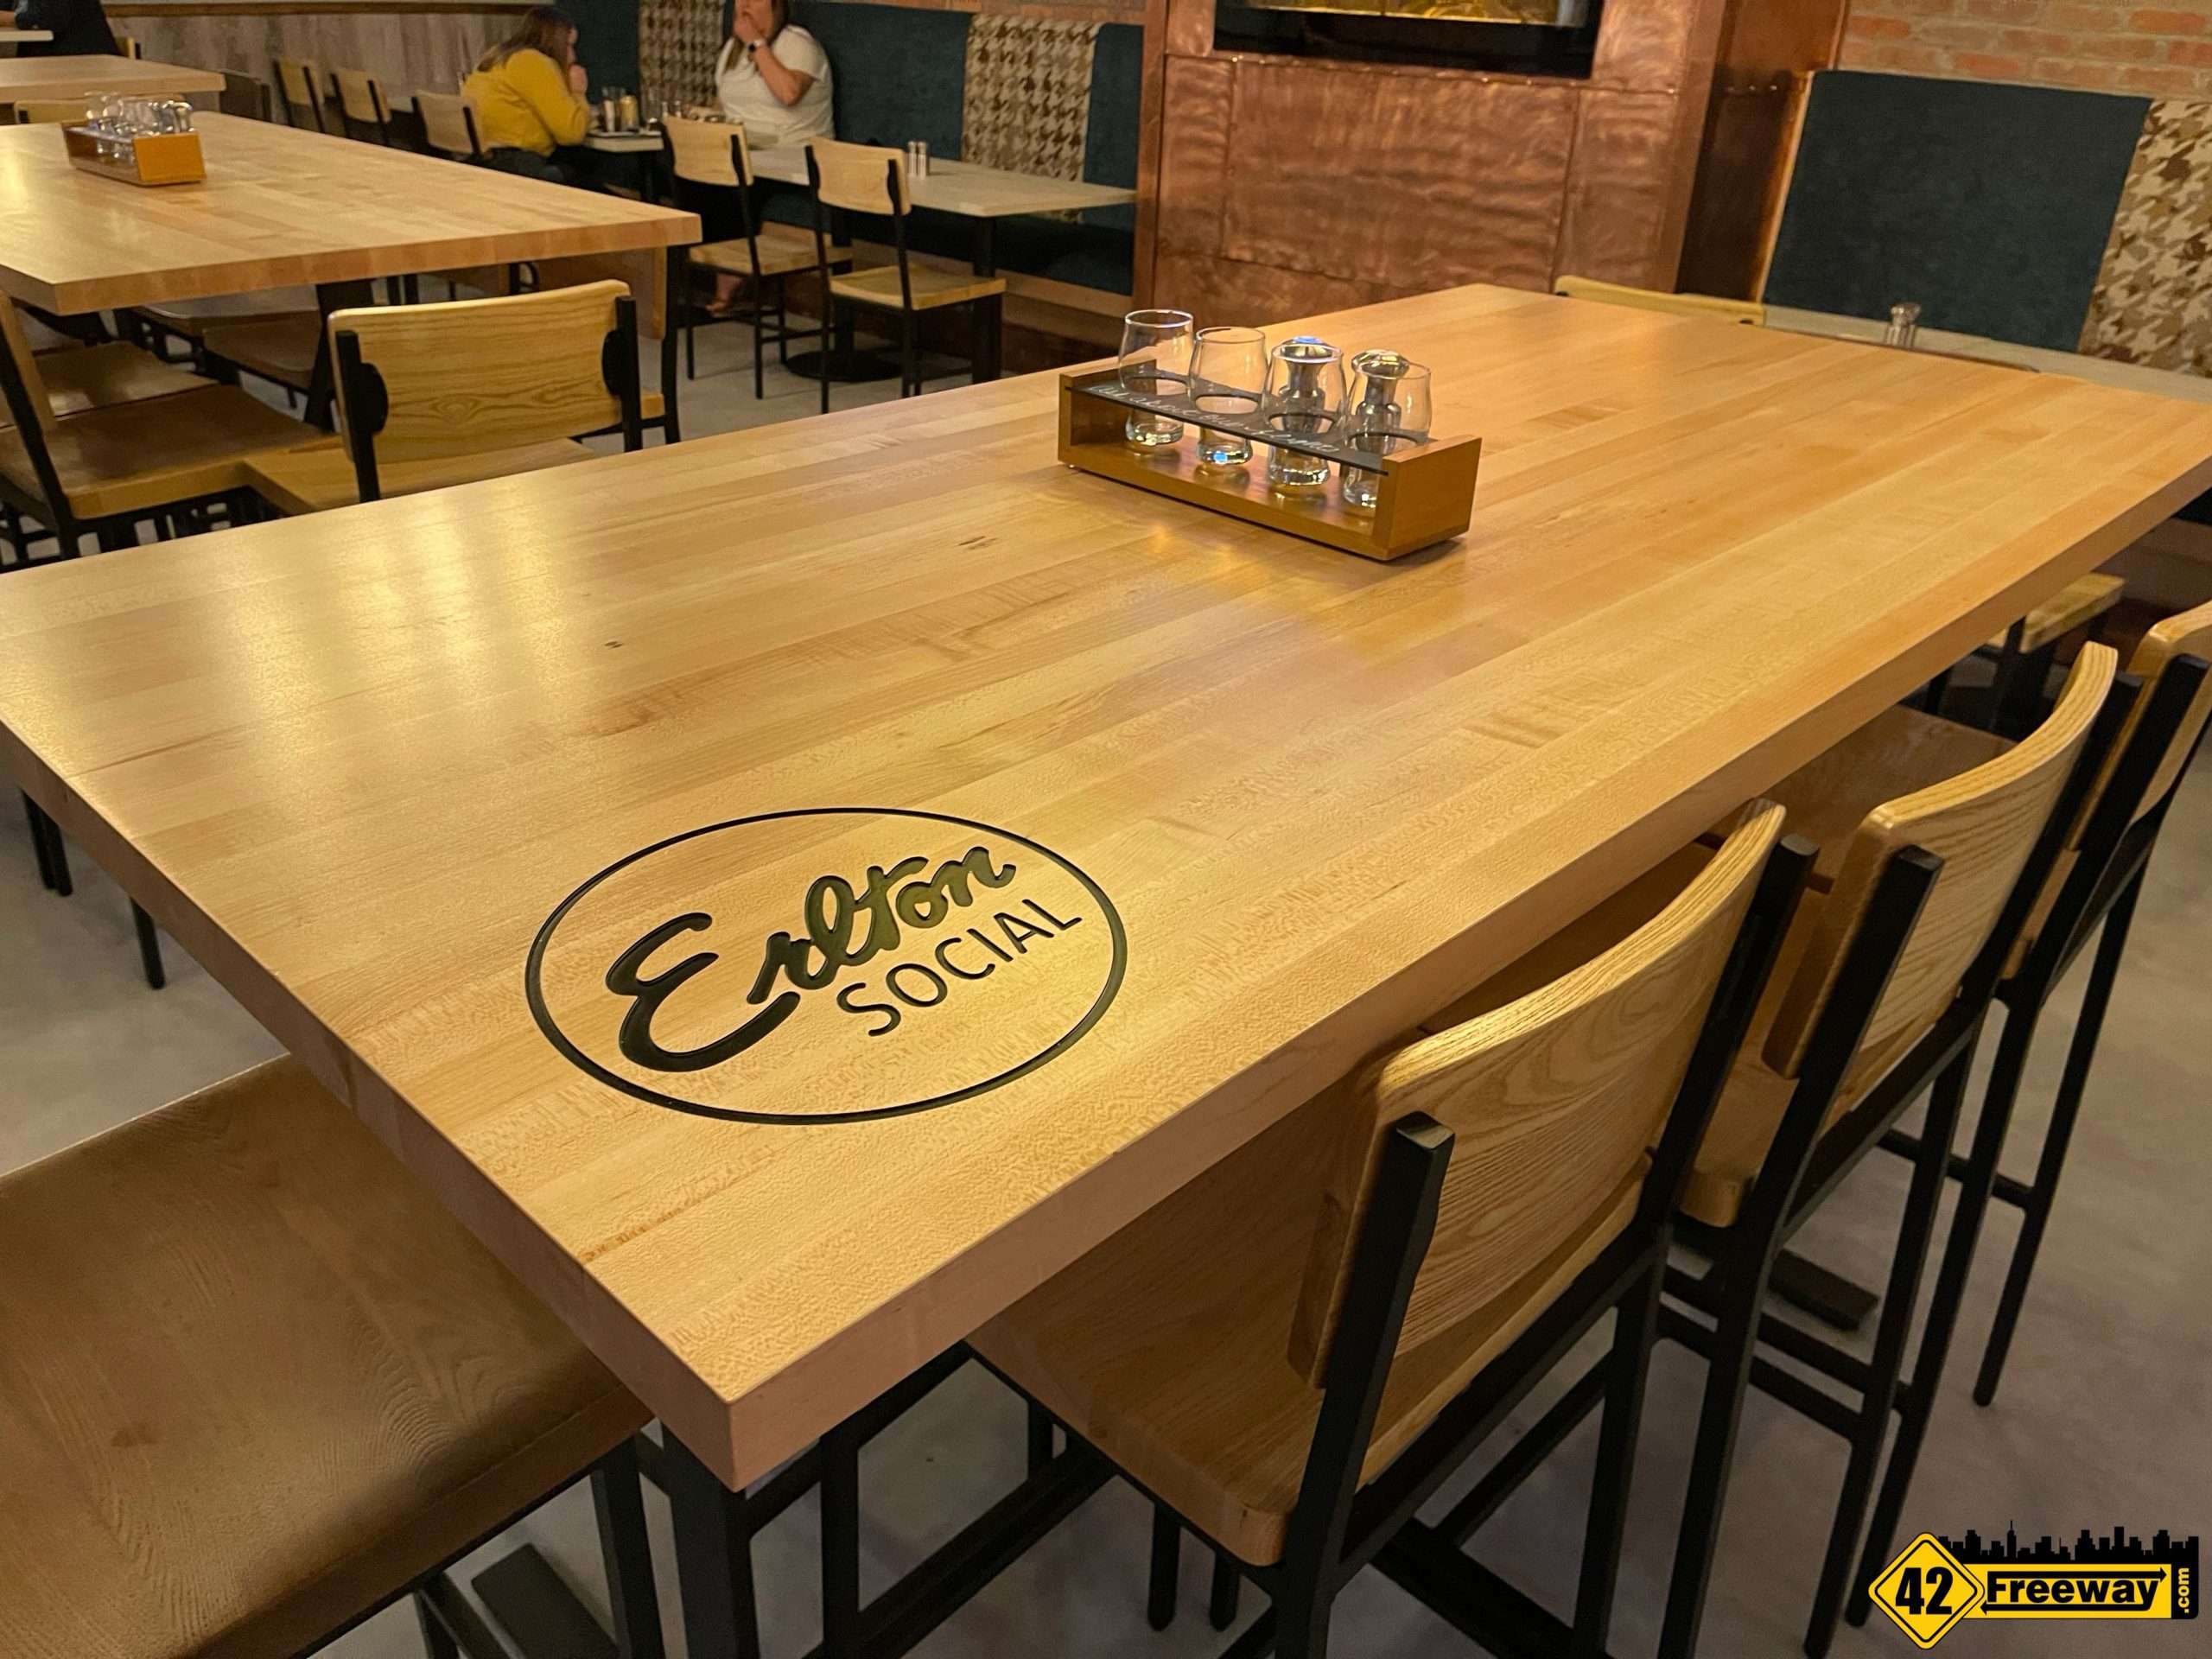 erlton social craft bar and kitchen menu